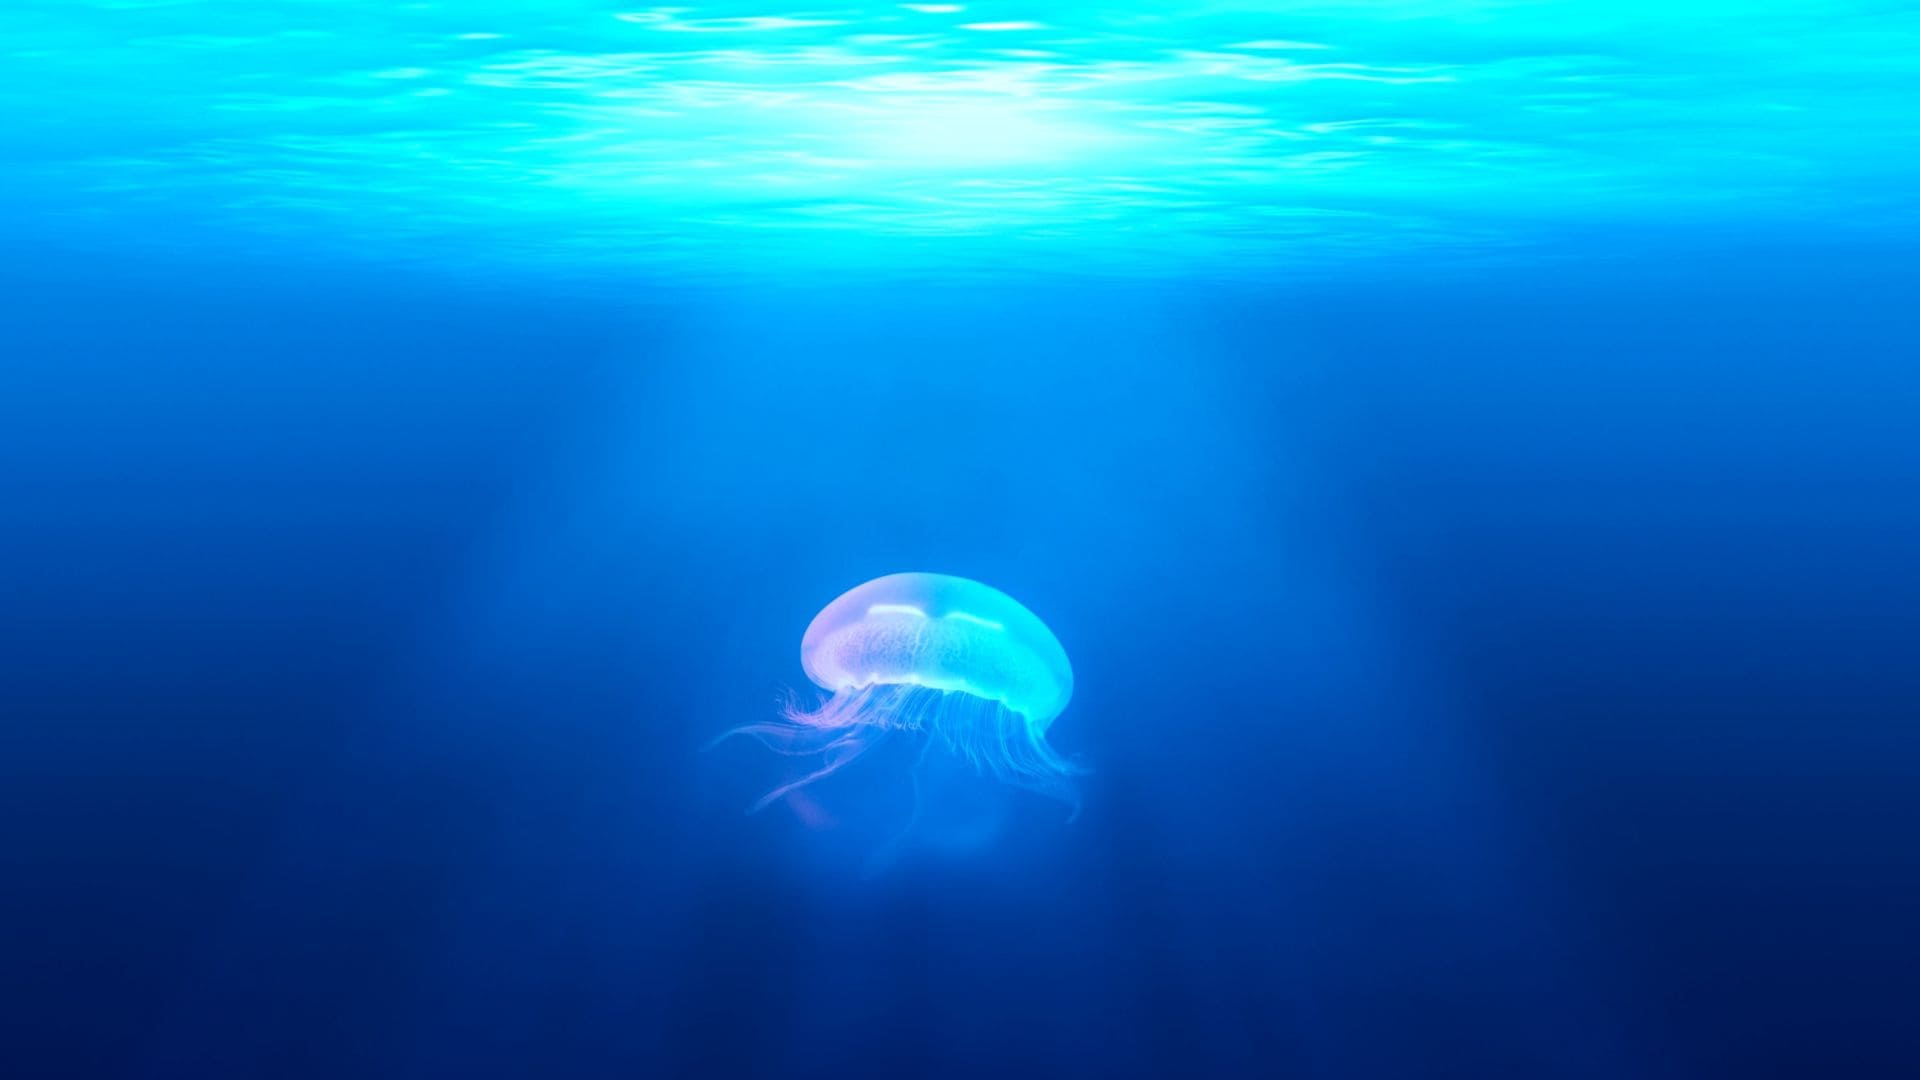 Jellyfish in the ocean with sunlight shining through - Underwater